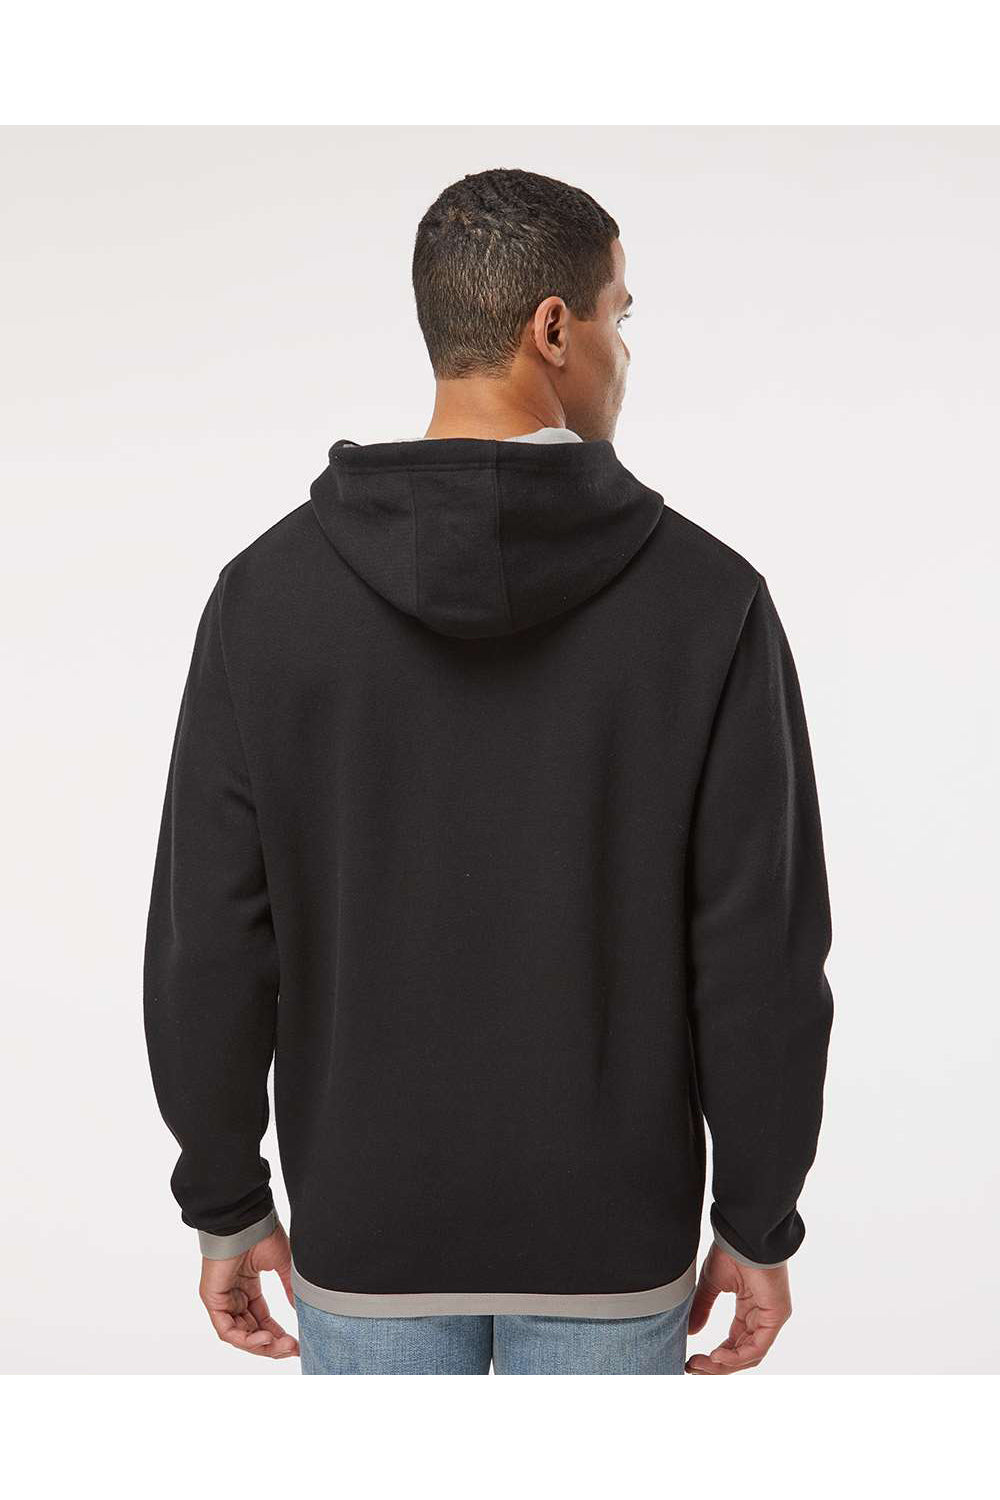 LAT 6996 Mens The Statement Fleece Hooded Sweatshirt Hoodie Black/Titanium Grey Model Back